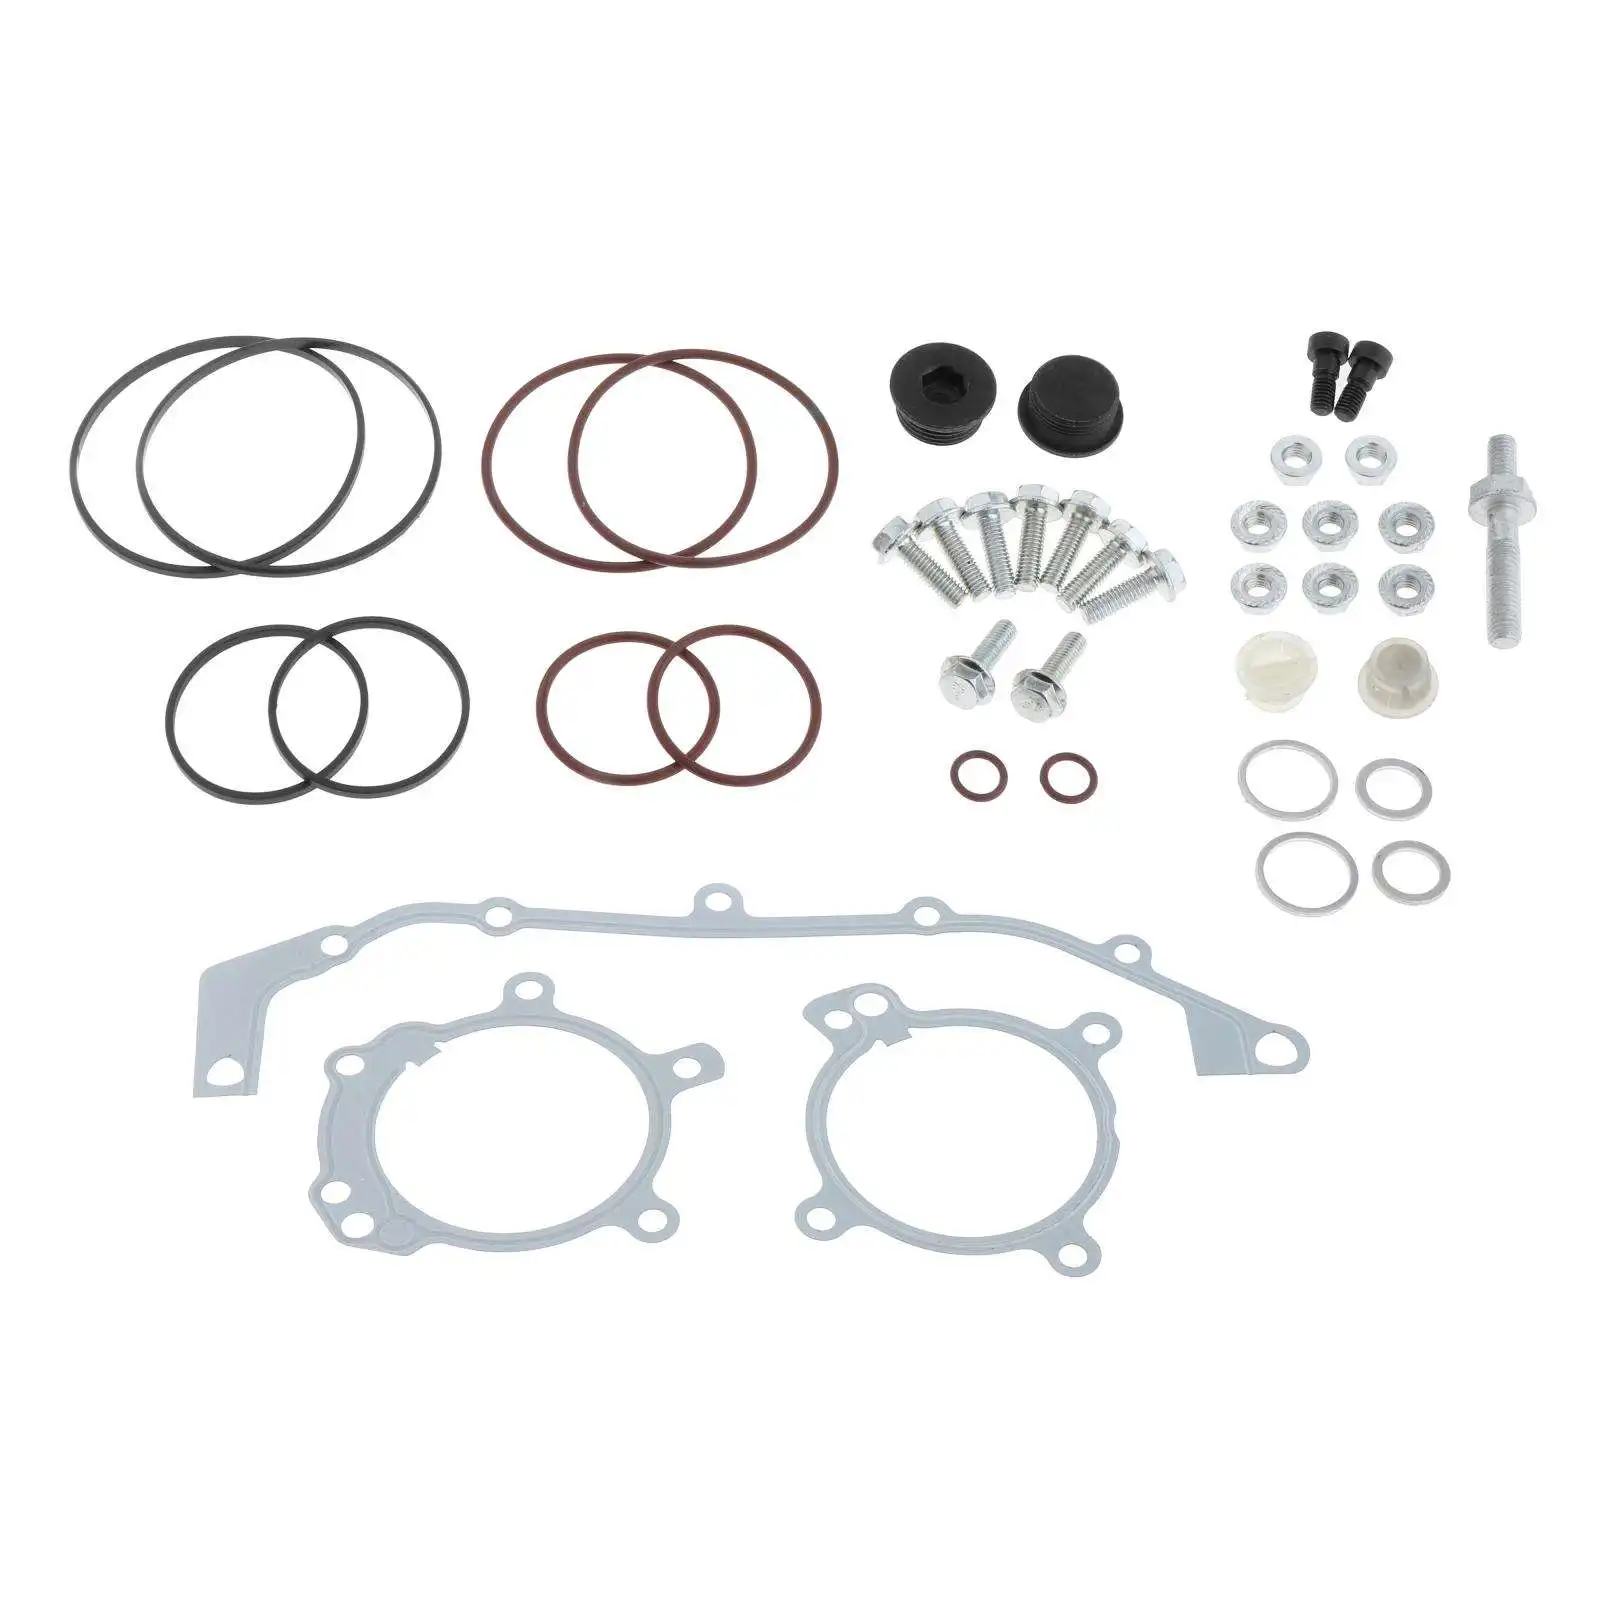 Dual O-Ring Seal Repair Kit Compatible for BMW E36 E39 E46 E53 E60 E83 E85 M52tu M54 M56